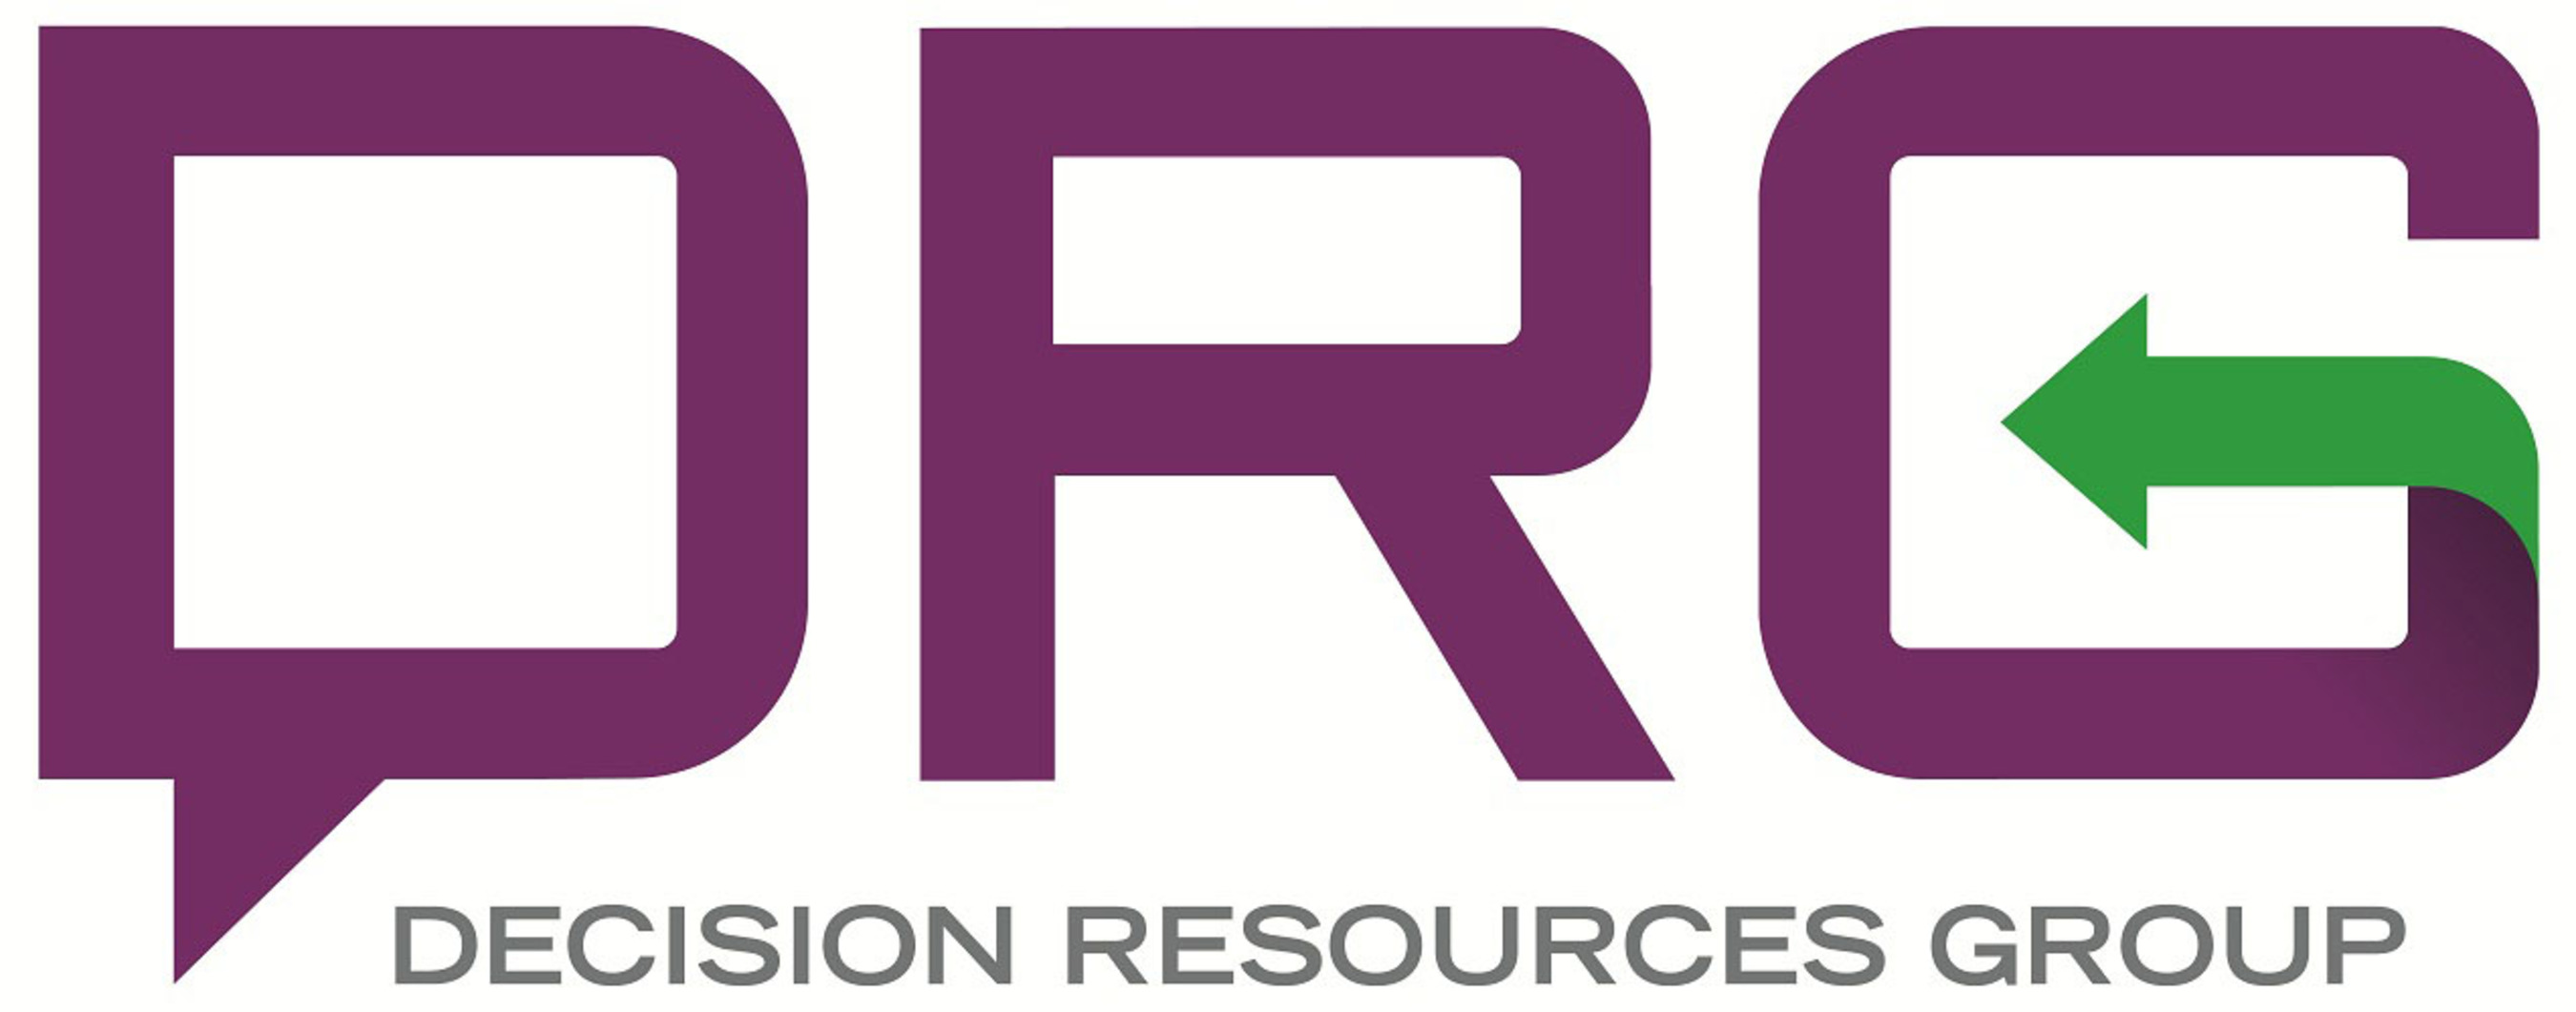 Decision Resources Group Logo. (PRNewsFoto/Decision Resources Group) (PRNewsFoto/)